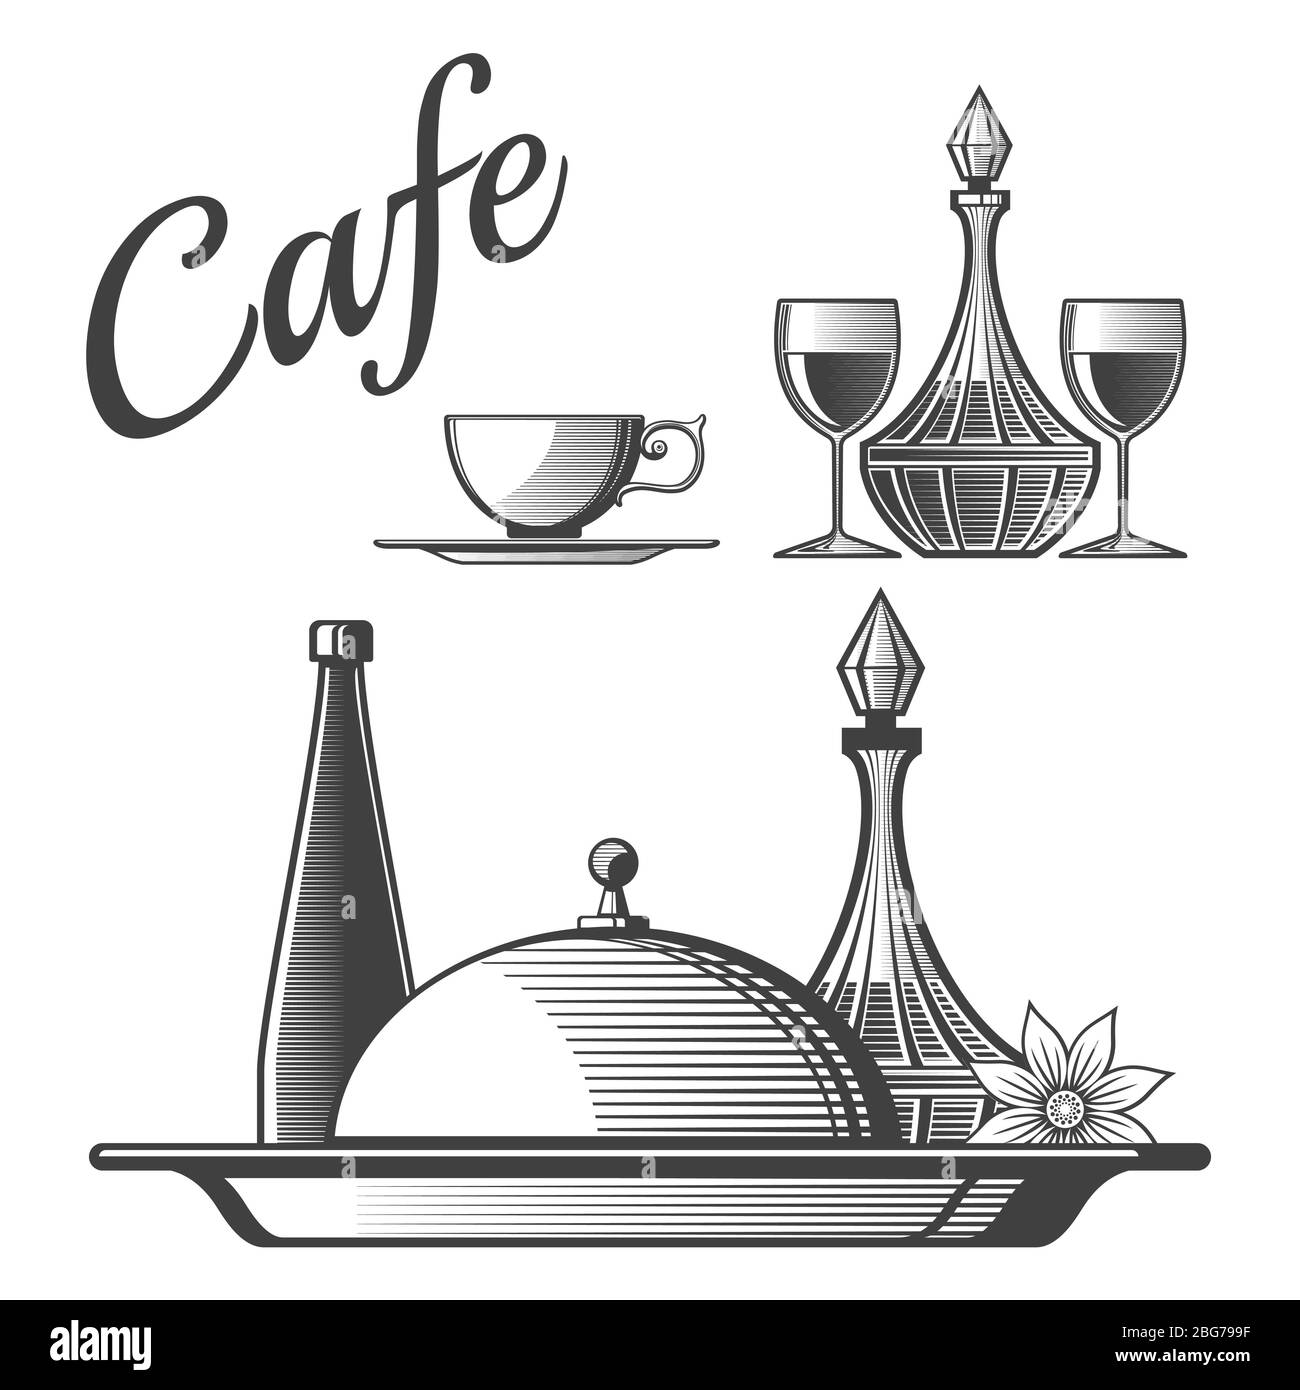 Gravur Stil Café, Restaurant-Elemente - Vektor Tasse, Weingläser, Geschirr Illustration Stock Vektor